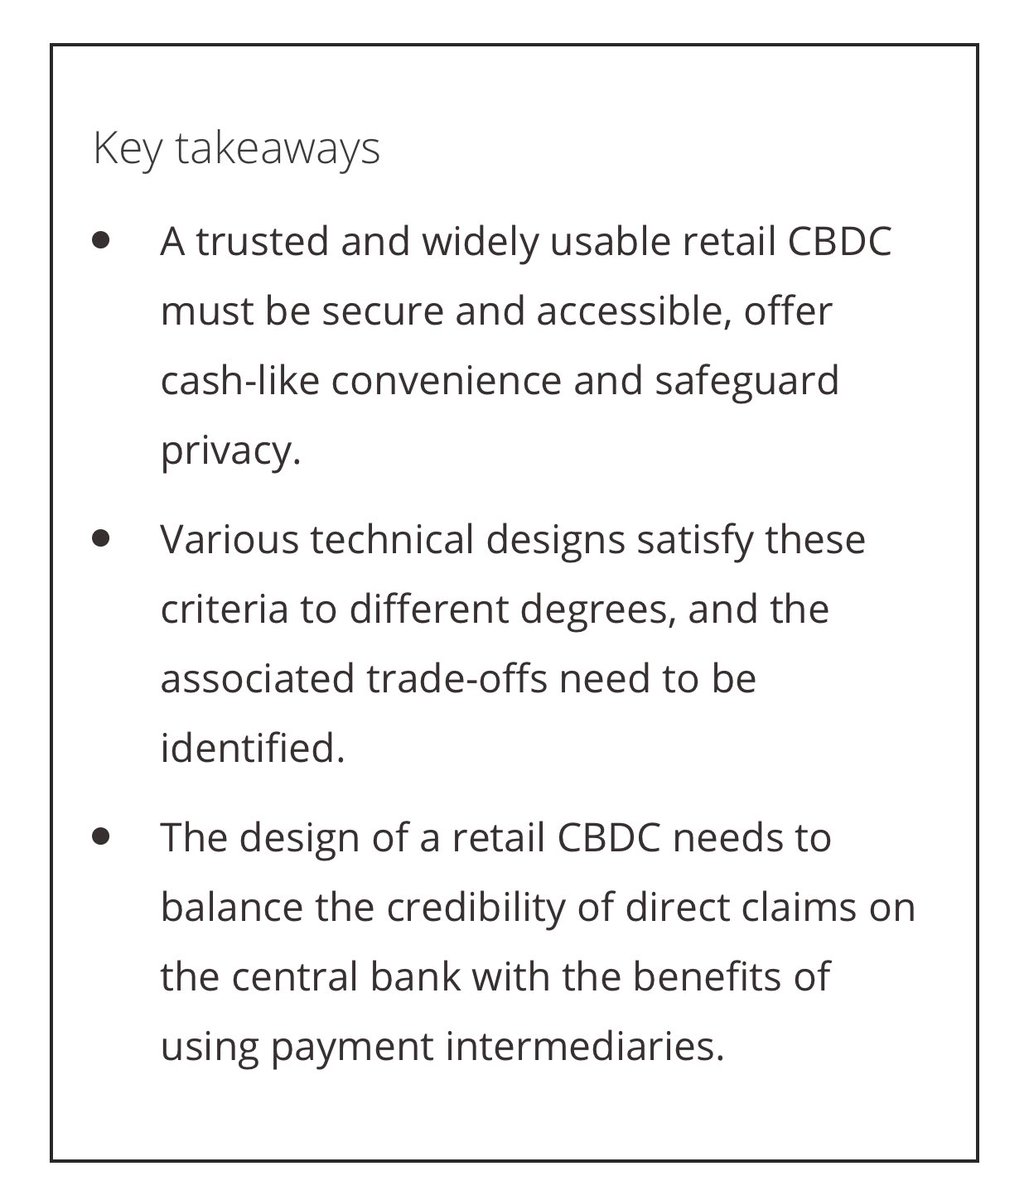  @BIS_org The technology of retail central bank digital currency.  https://www.bis.org/publ/qtrpdf/r_qt2003j.pdf  #CBDC